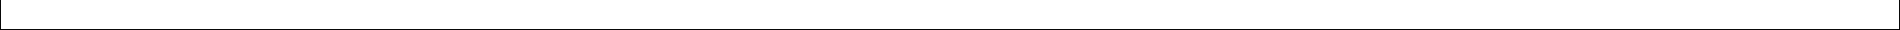 SEIBIDO　正美堂　（有）正美堂　折込チラシ　リーフレット　シール印刷　印刷　印刷物　デザイン　sing　看板　のぼり　旗　横浜市　横浜市泉区　泉区　デザイン会社